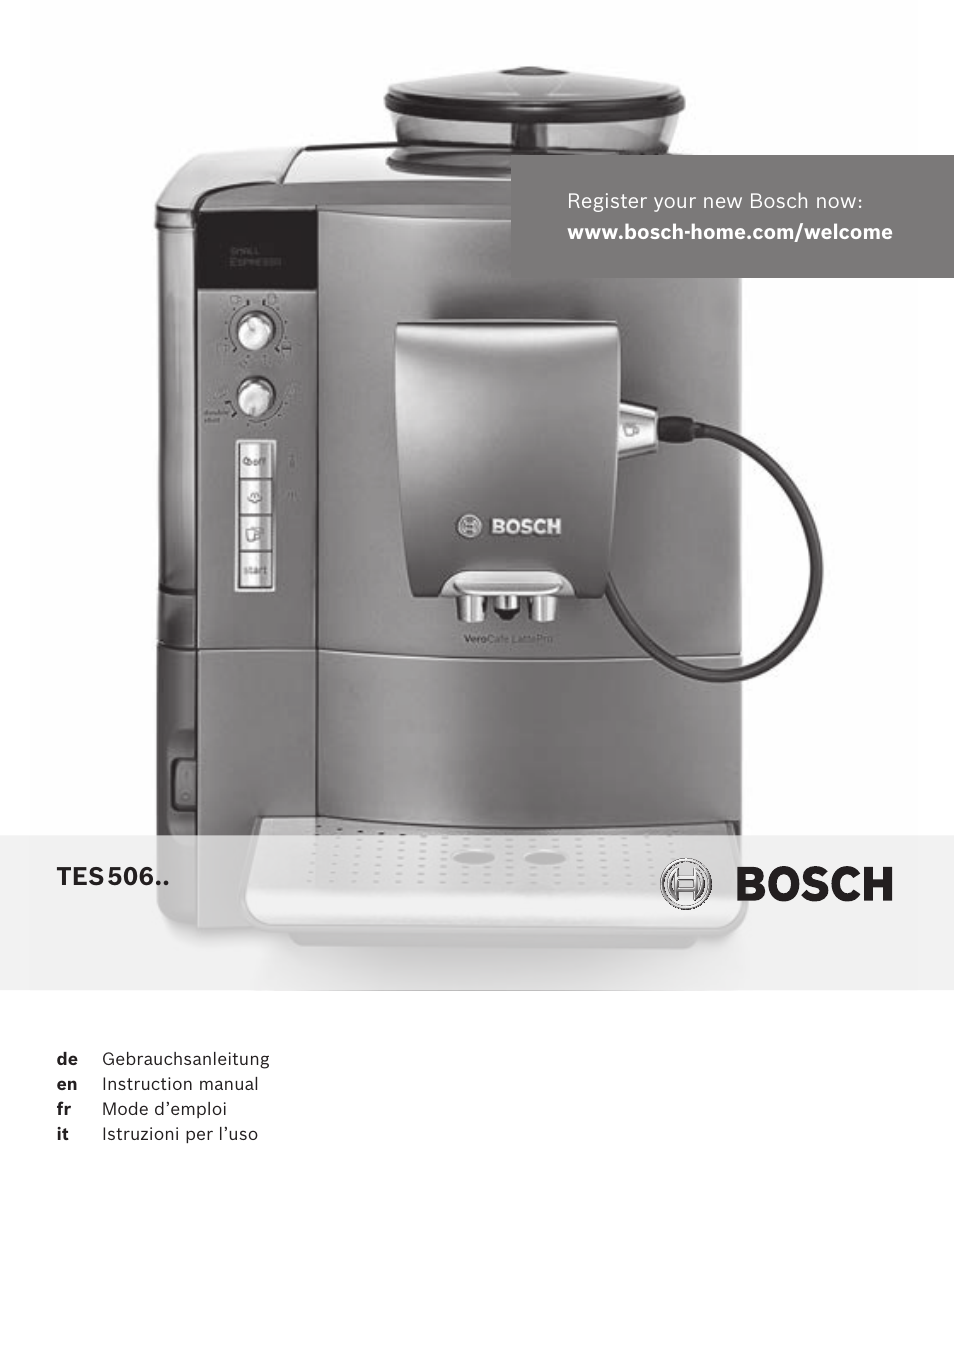 Bosch TES50651DE VeroCafe LattePro Kaffeevollautomat Helles Anthrazit  Morning Haze User Manual | 94 pages | Also for: TES50658DE VeroCafe  LattePro Kaffeevollautomat Dunkles Espressobraun Dark Espresso